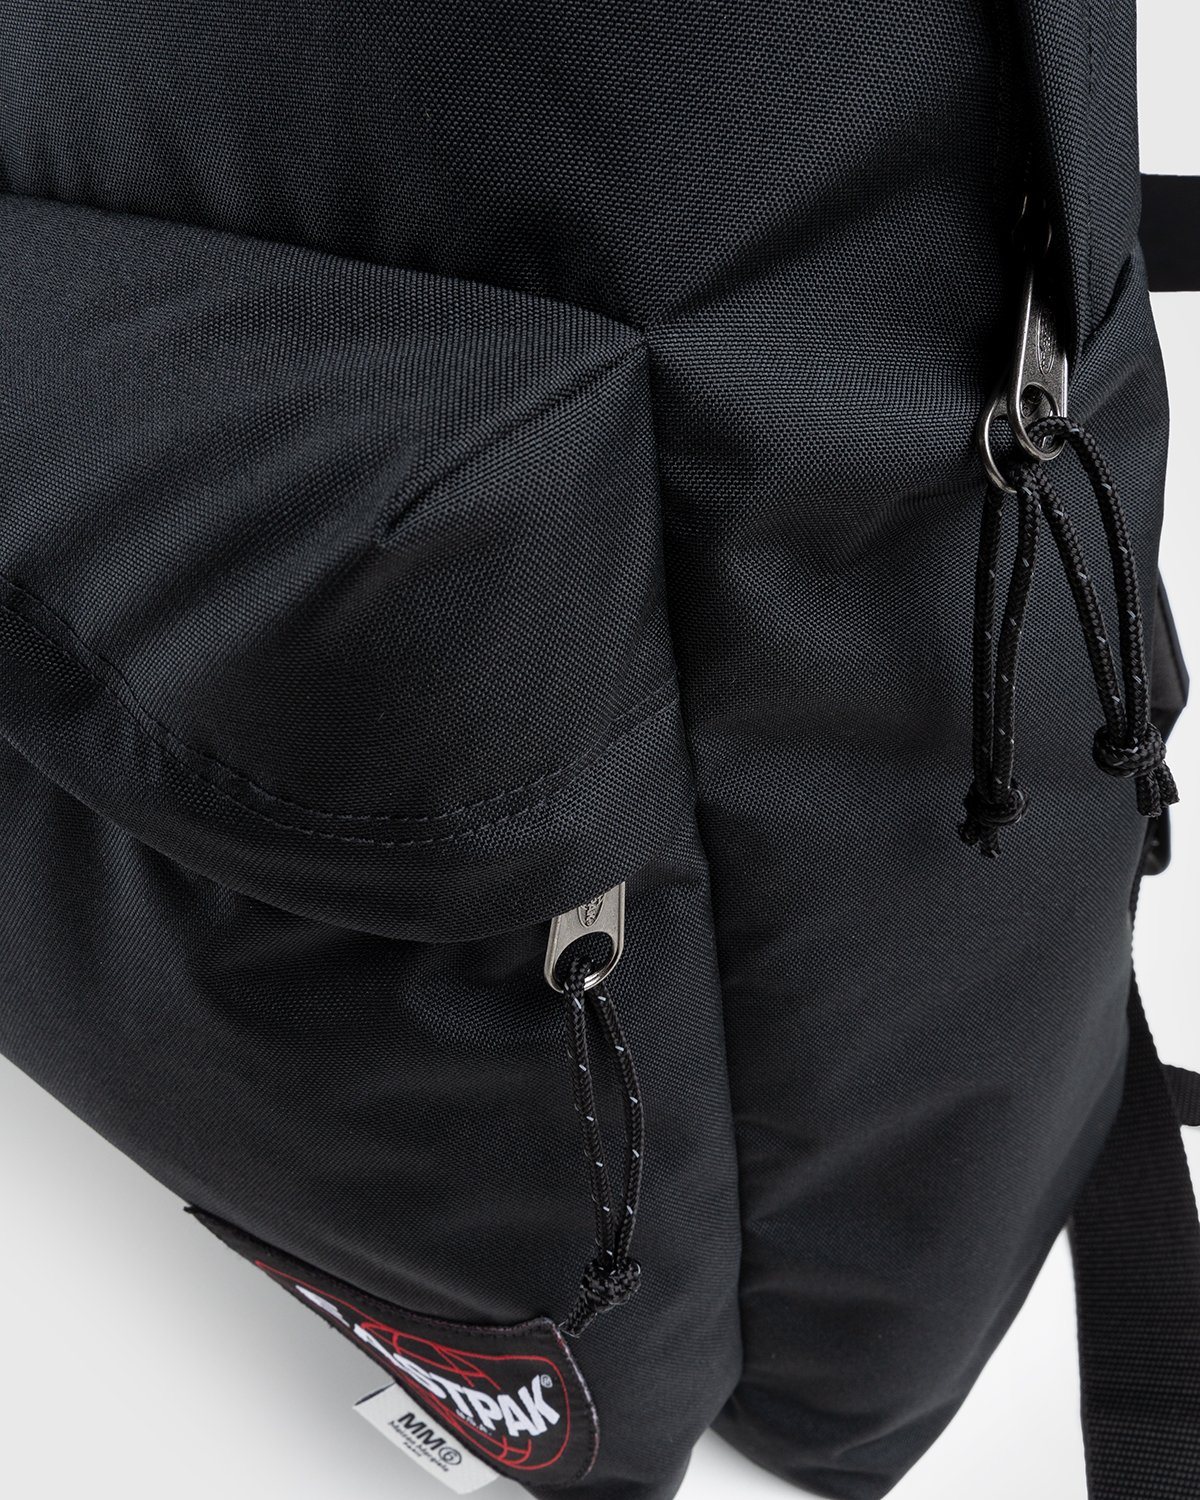 MM6 Maison Margiela x Eastpak - Zaino Backpack Black - Accessories - Black - Image 5